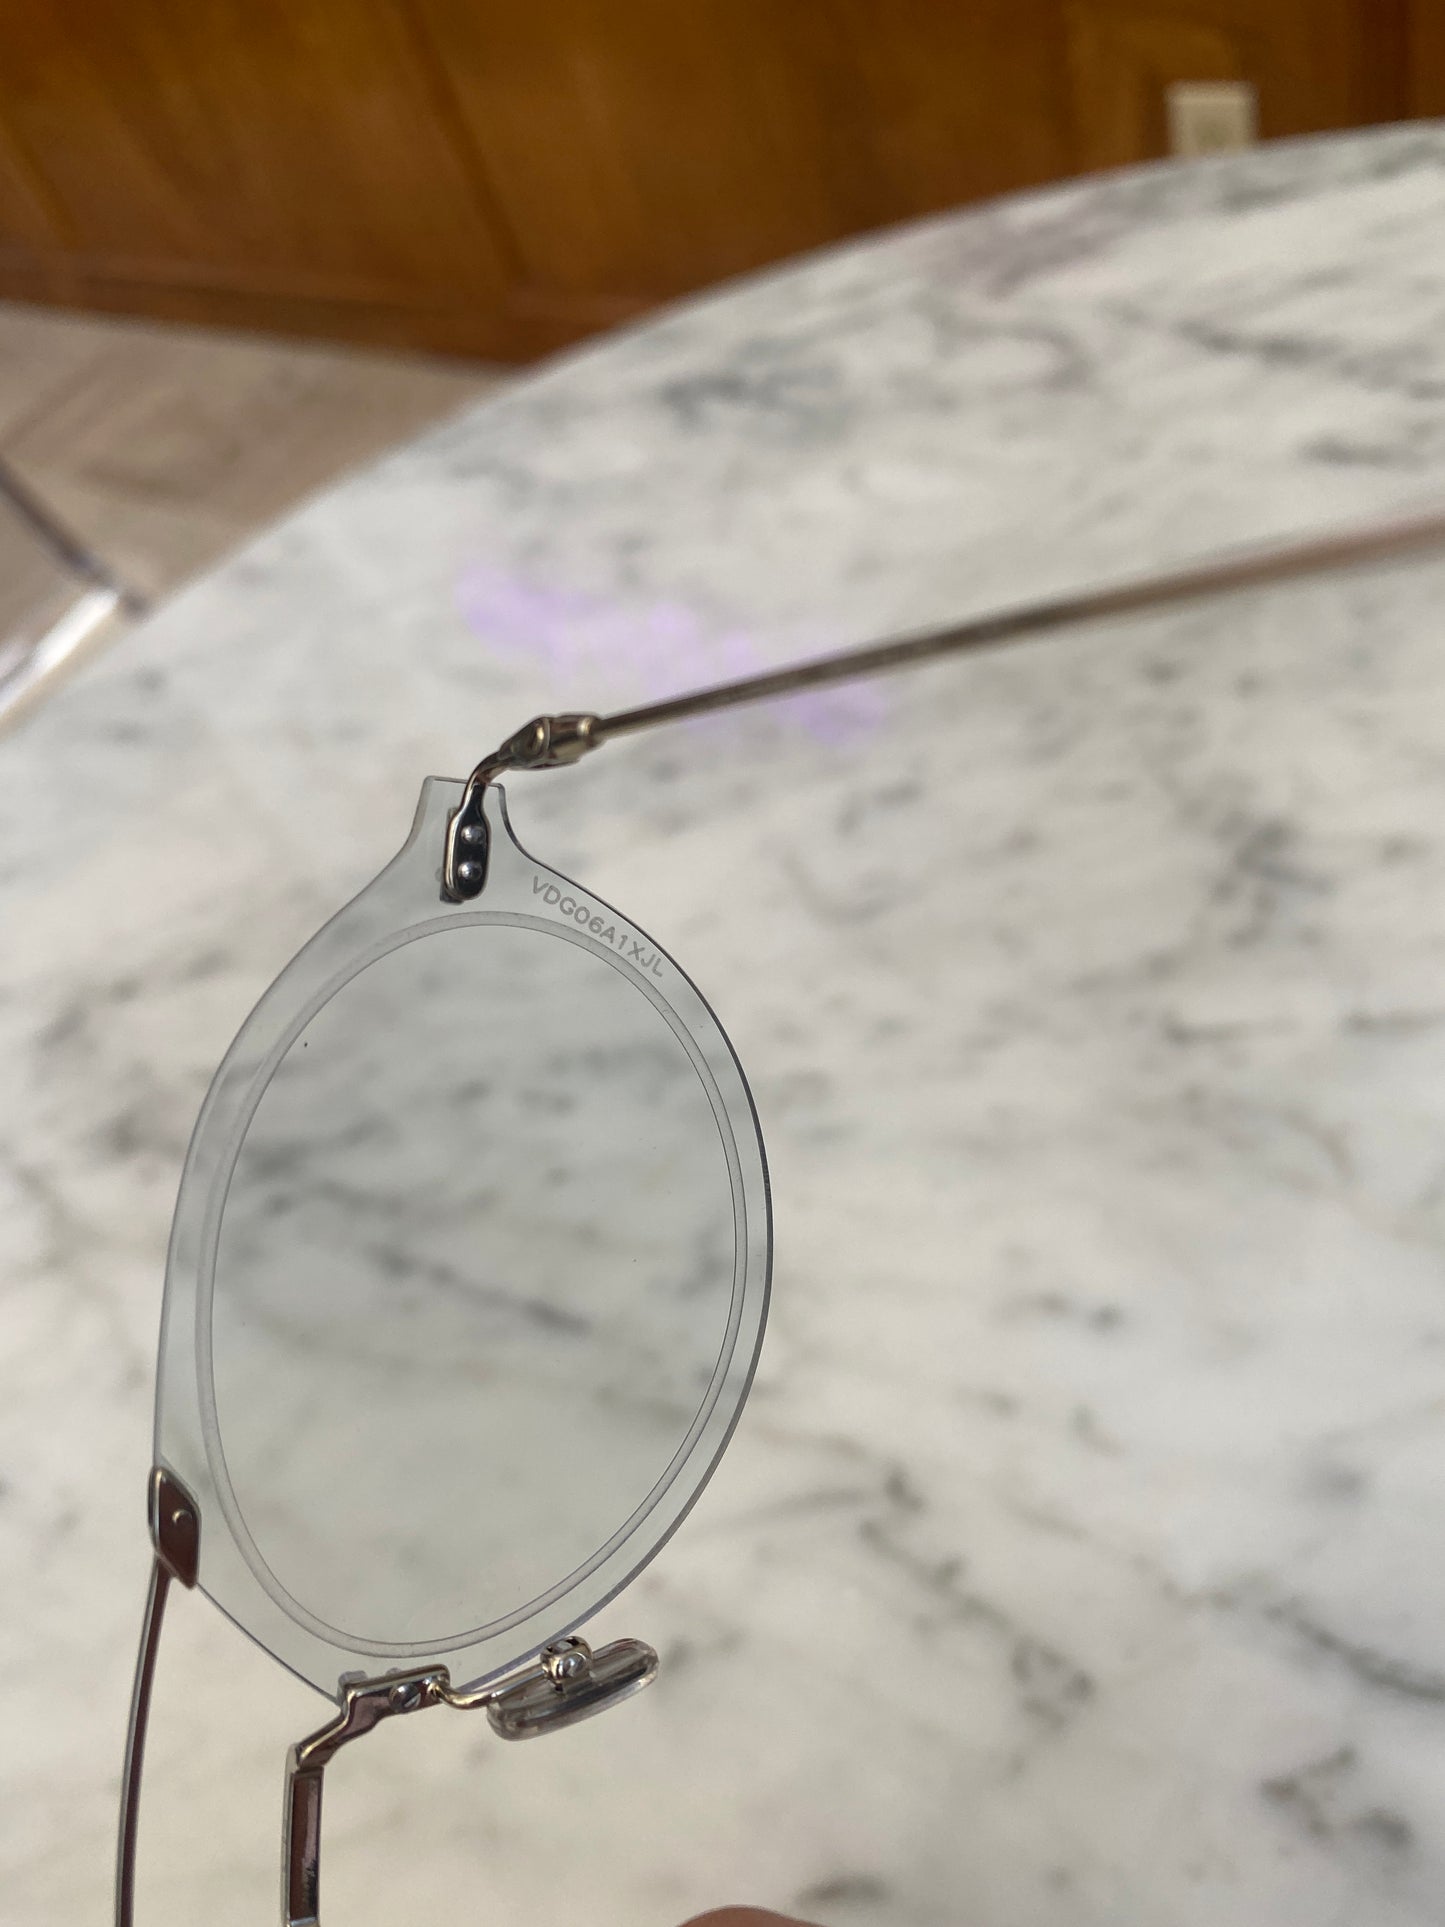 Dior - Clear Lens Chroma 3 Sunglasses